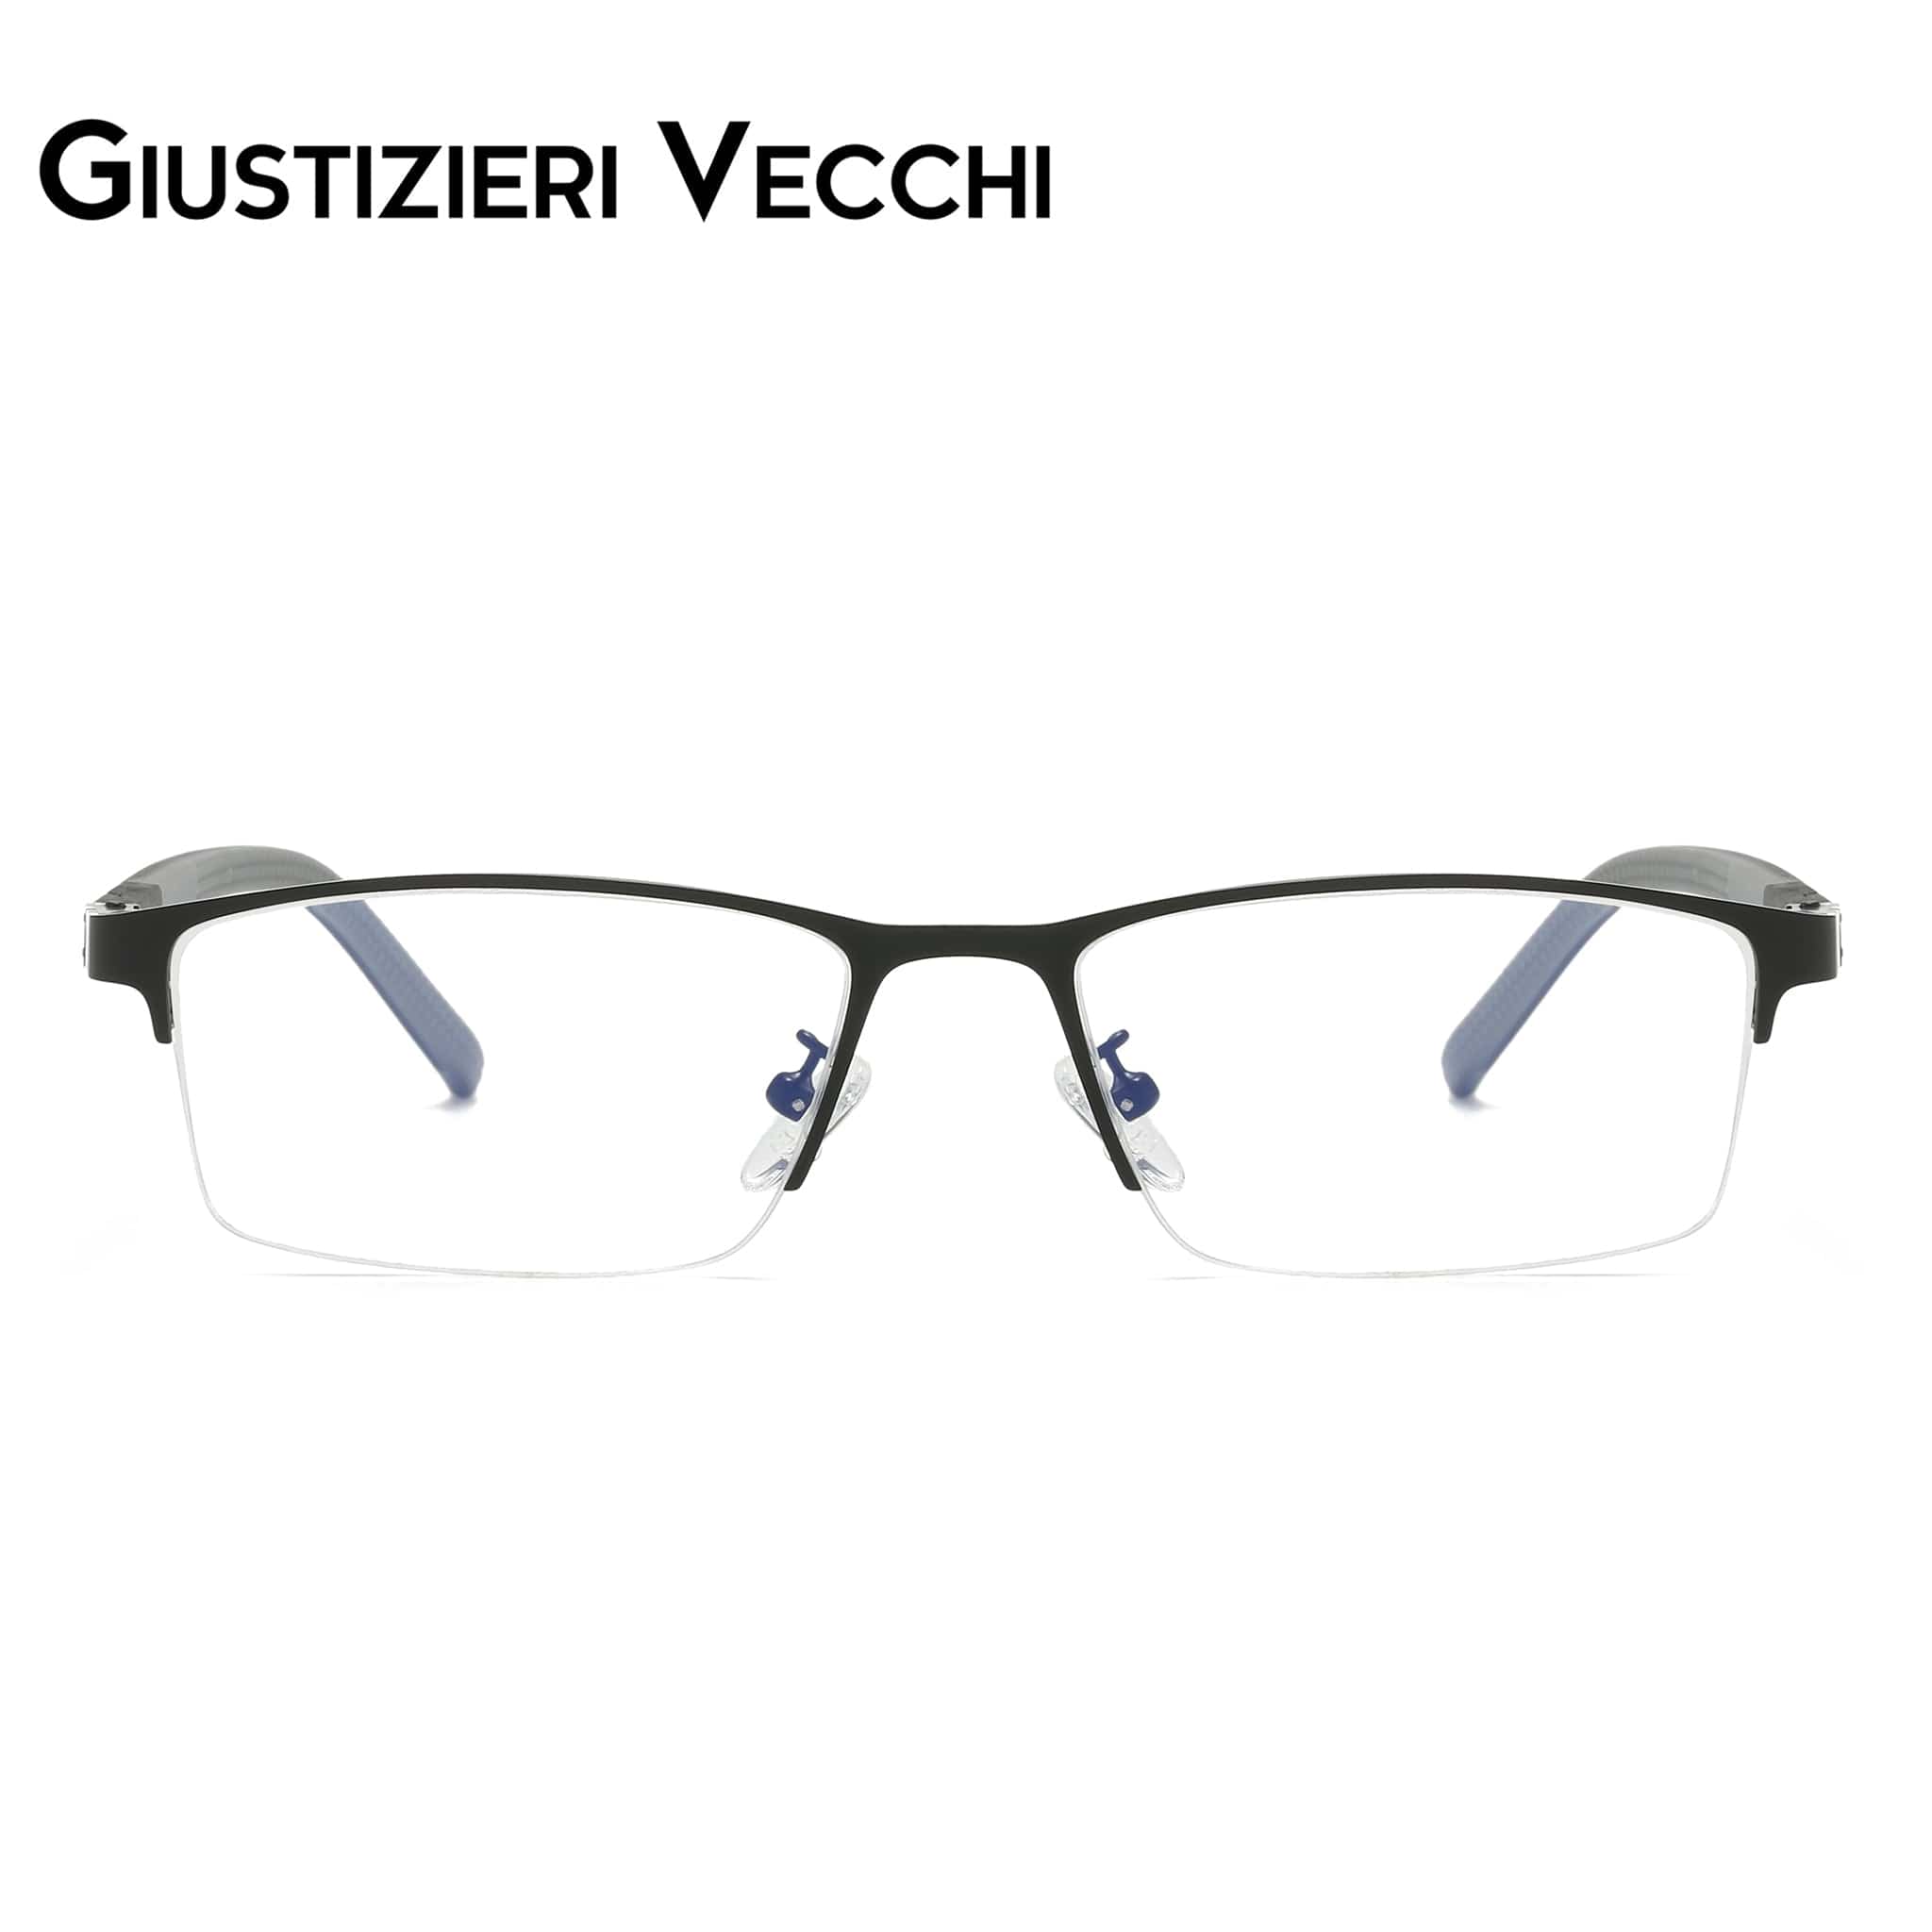 GIUSTIZIERI VECCHI Eyeglasses Large / Black with Grey HydroFlash Uno